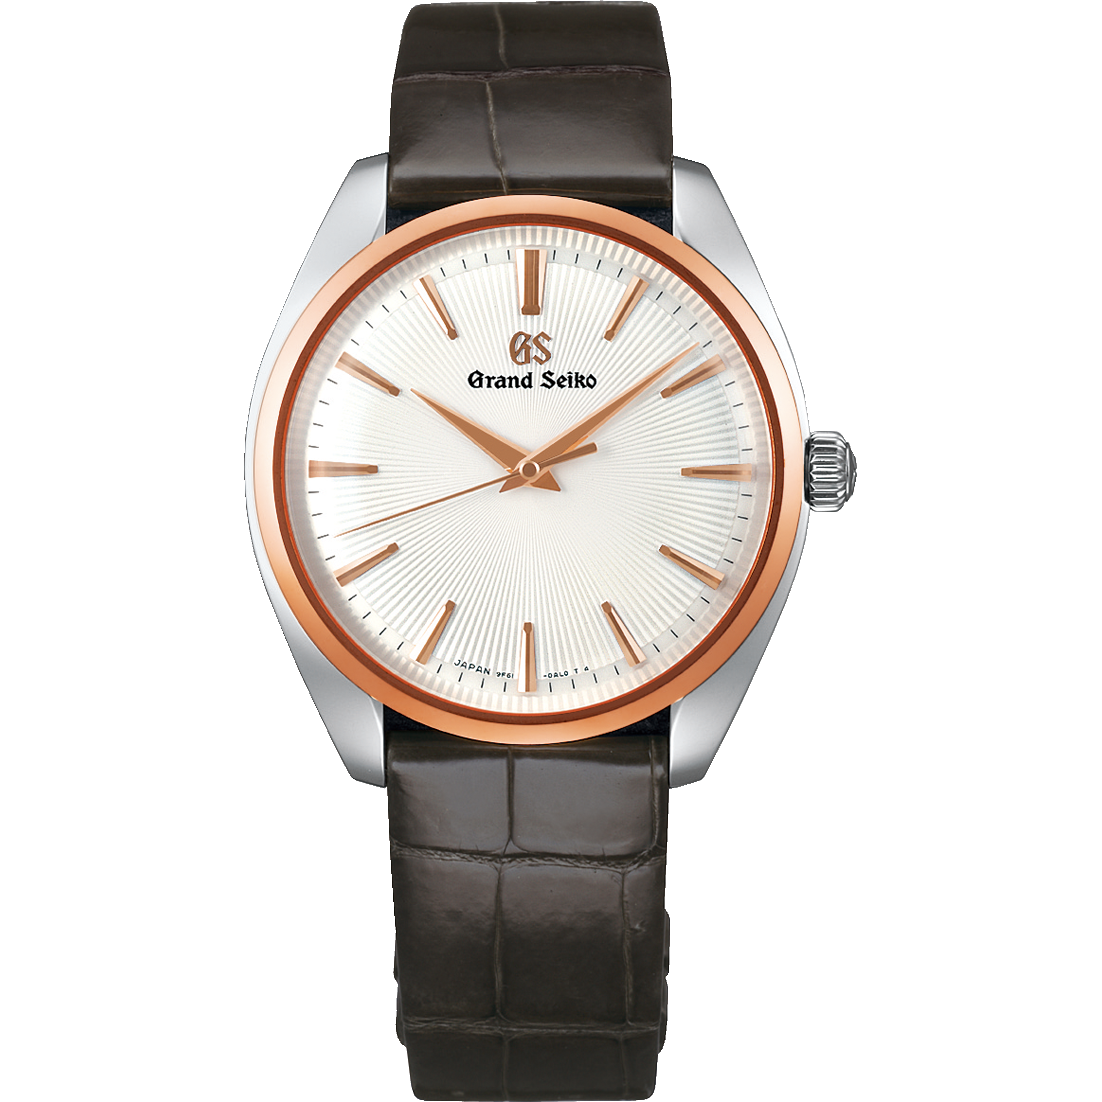 Grand Seiko Elegance Collection SBGX344 Battery-powered quartz watch - IPPO JAPAN WATCH 